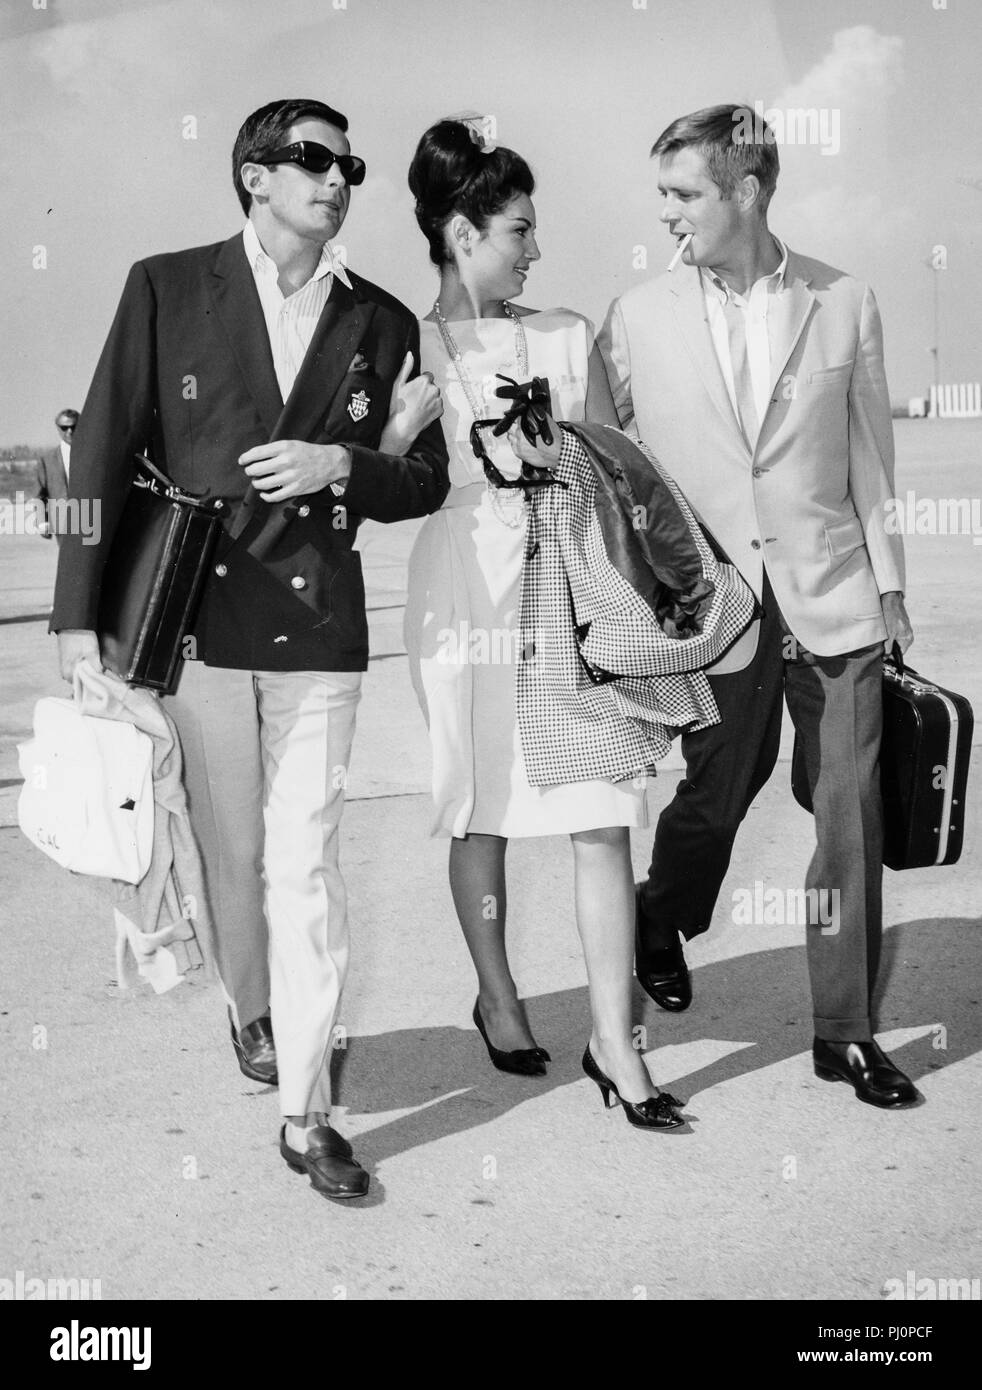 george hamilton, george peppard, rosanna schiaffino, rome 1962 Stock Photo